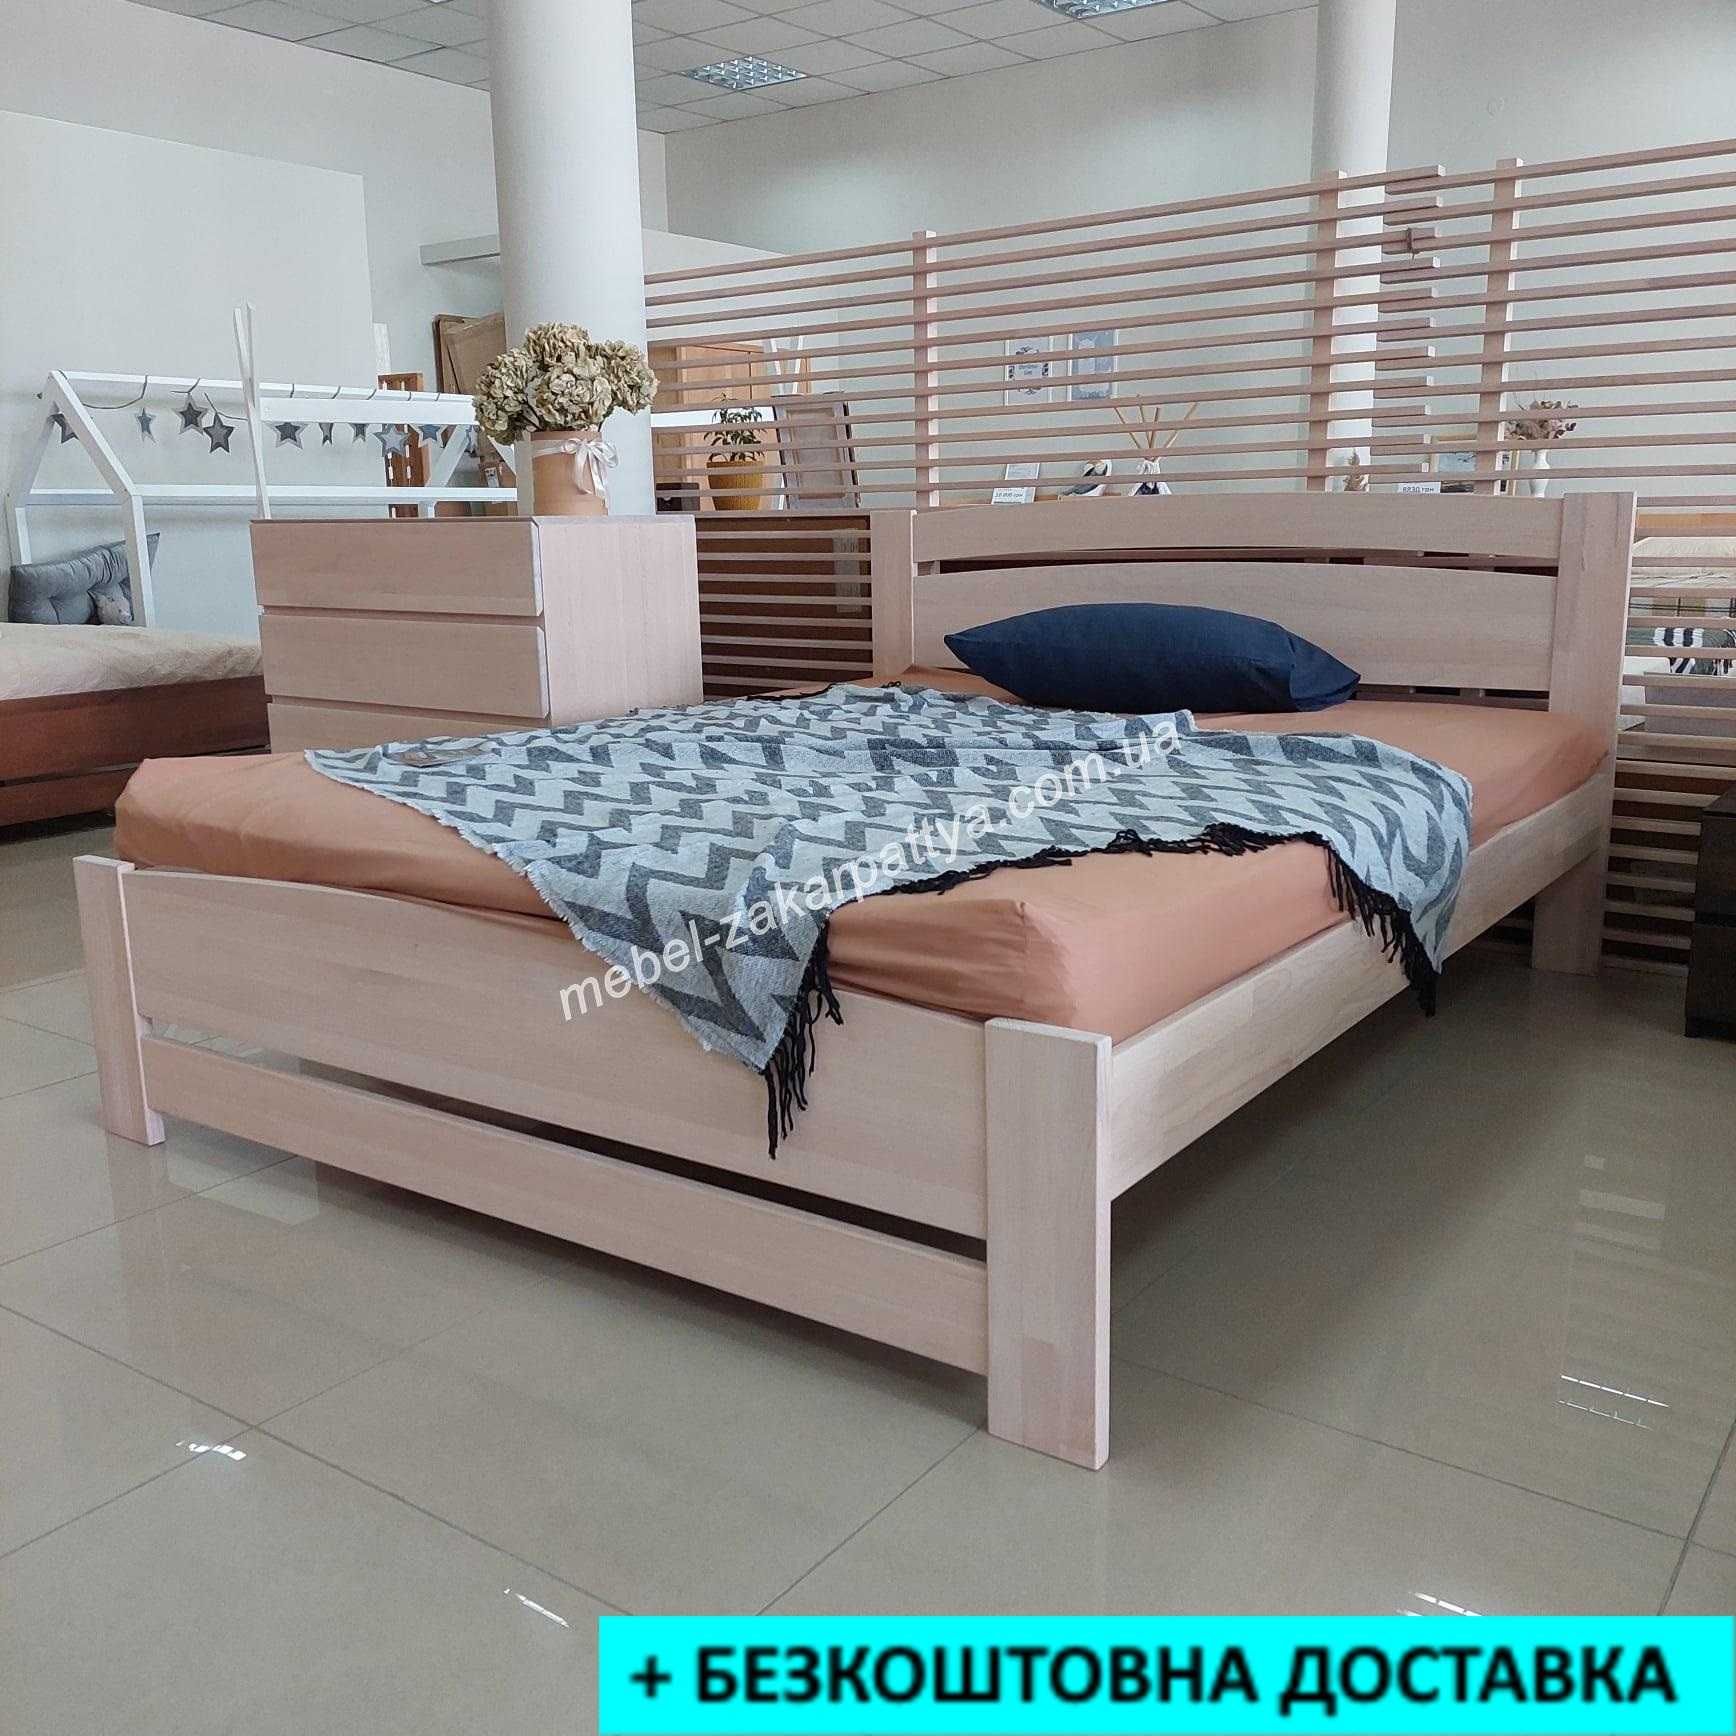 Ліжко деревяне двуспальне. Кровать деревянная бук 90,120,140,160х200.